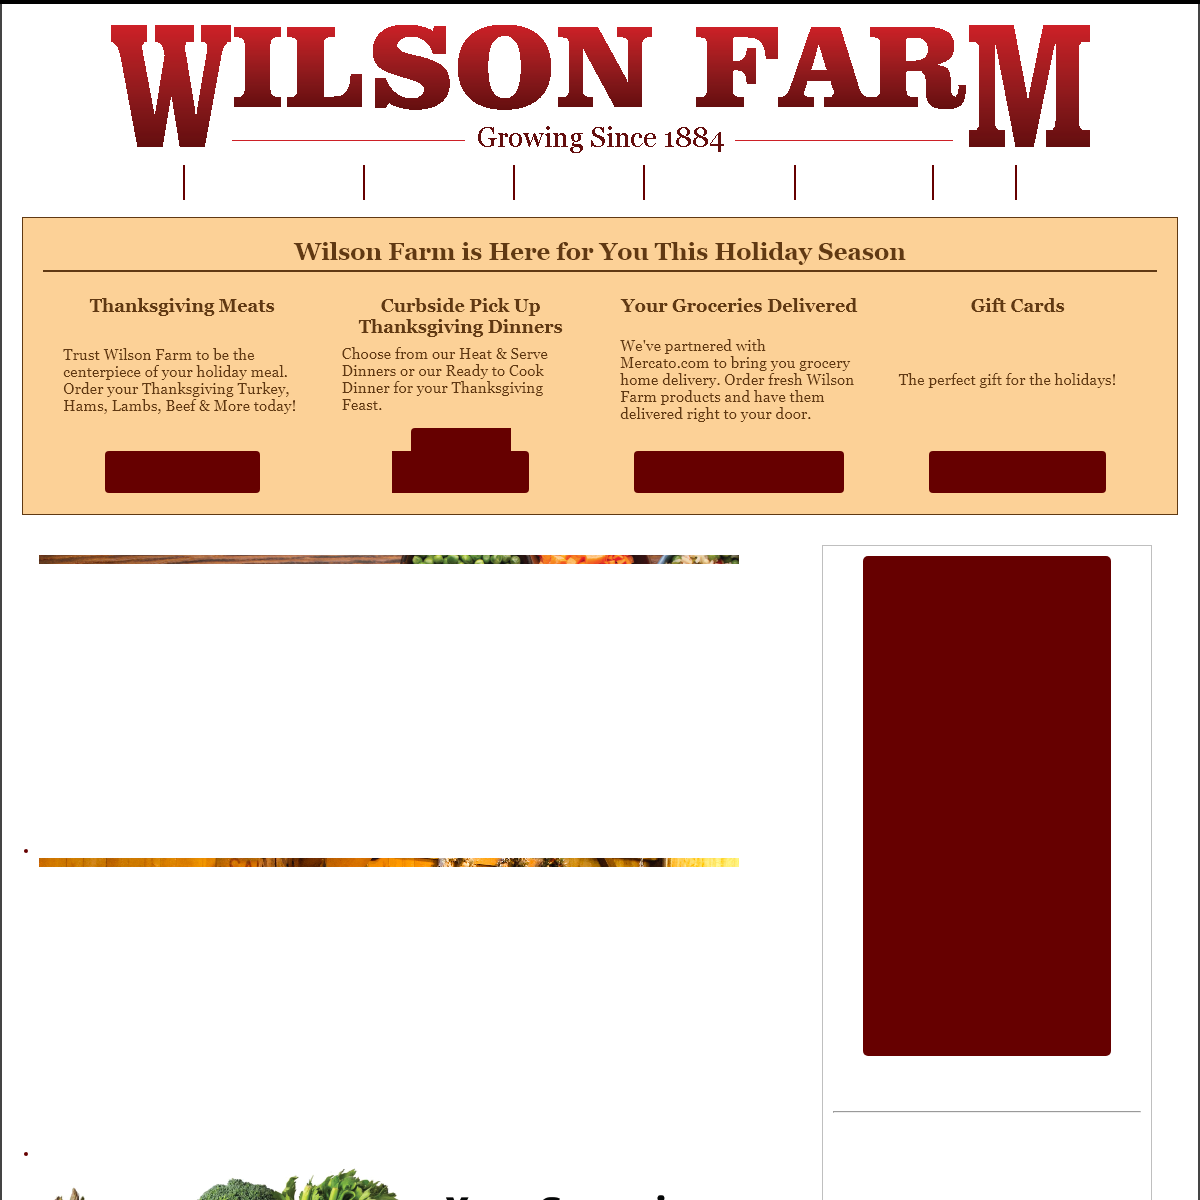 A complete backup of wilsonfarm.com